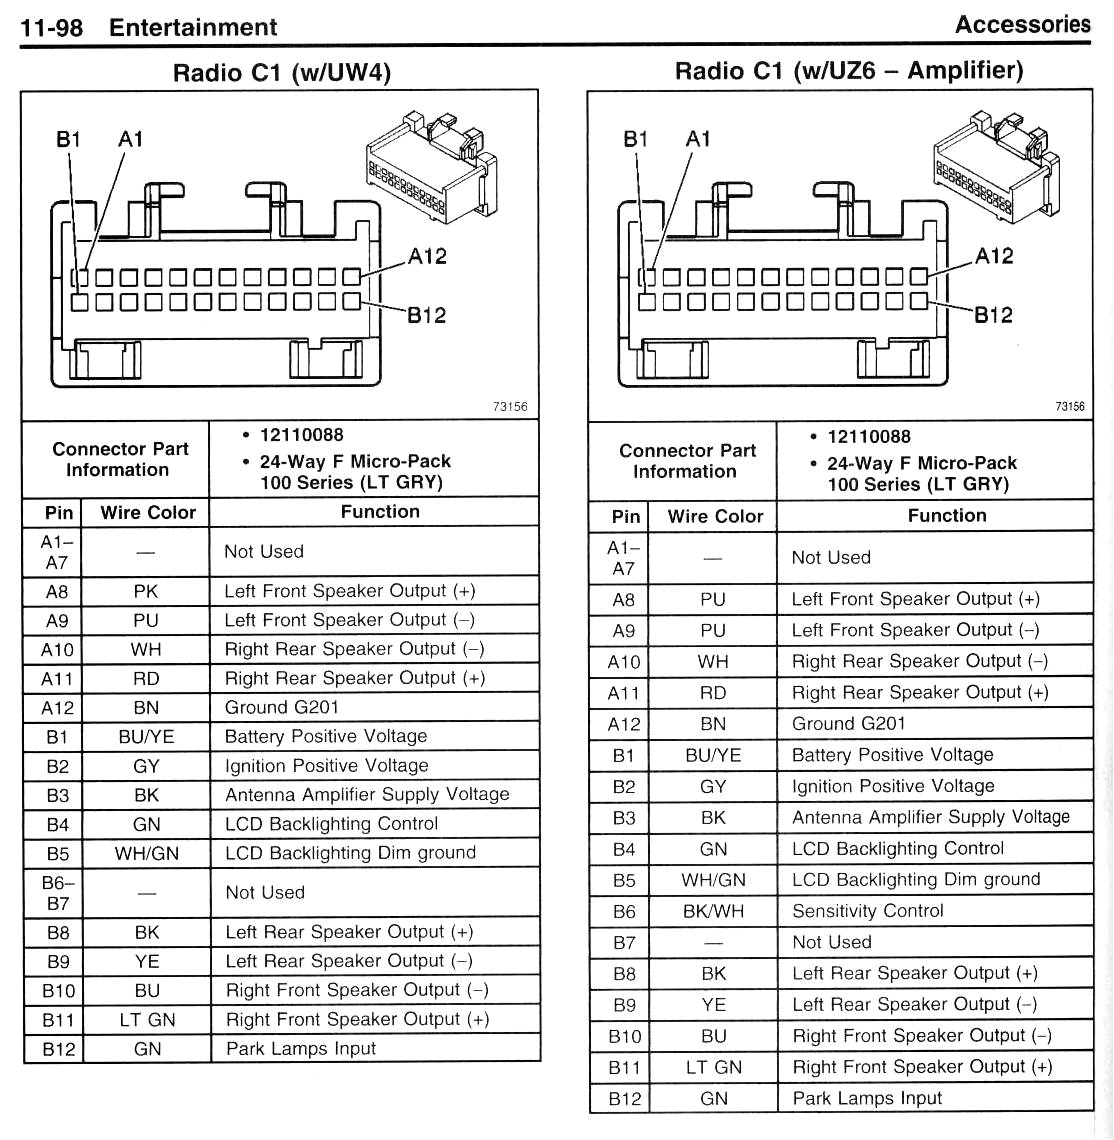 2015 Chevy Malibu Stereo Wiring Diagram 9c477f1 2003 Chevy Malibu Abs Wiring Diagram Wiring Library